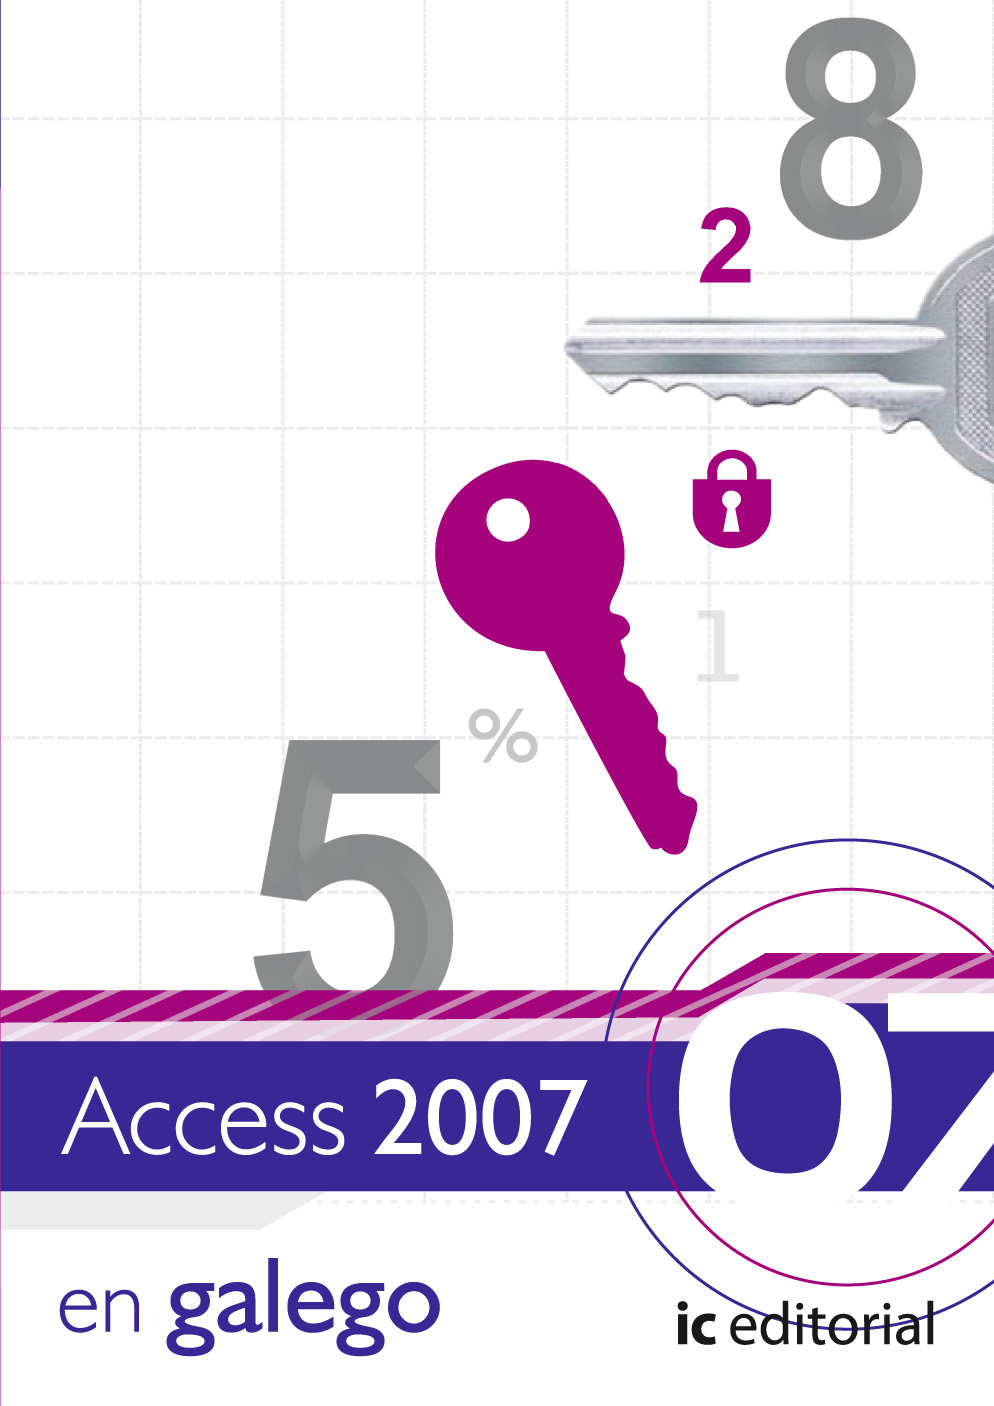 Access 2007 - versión galego